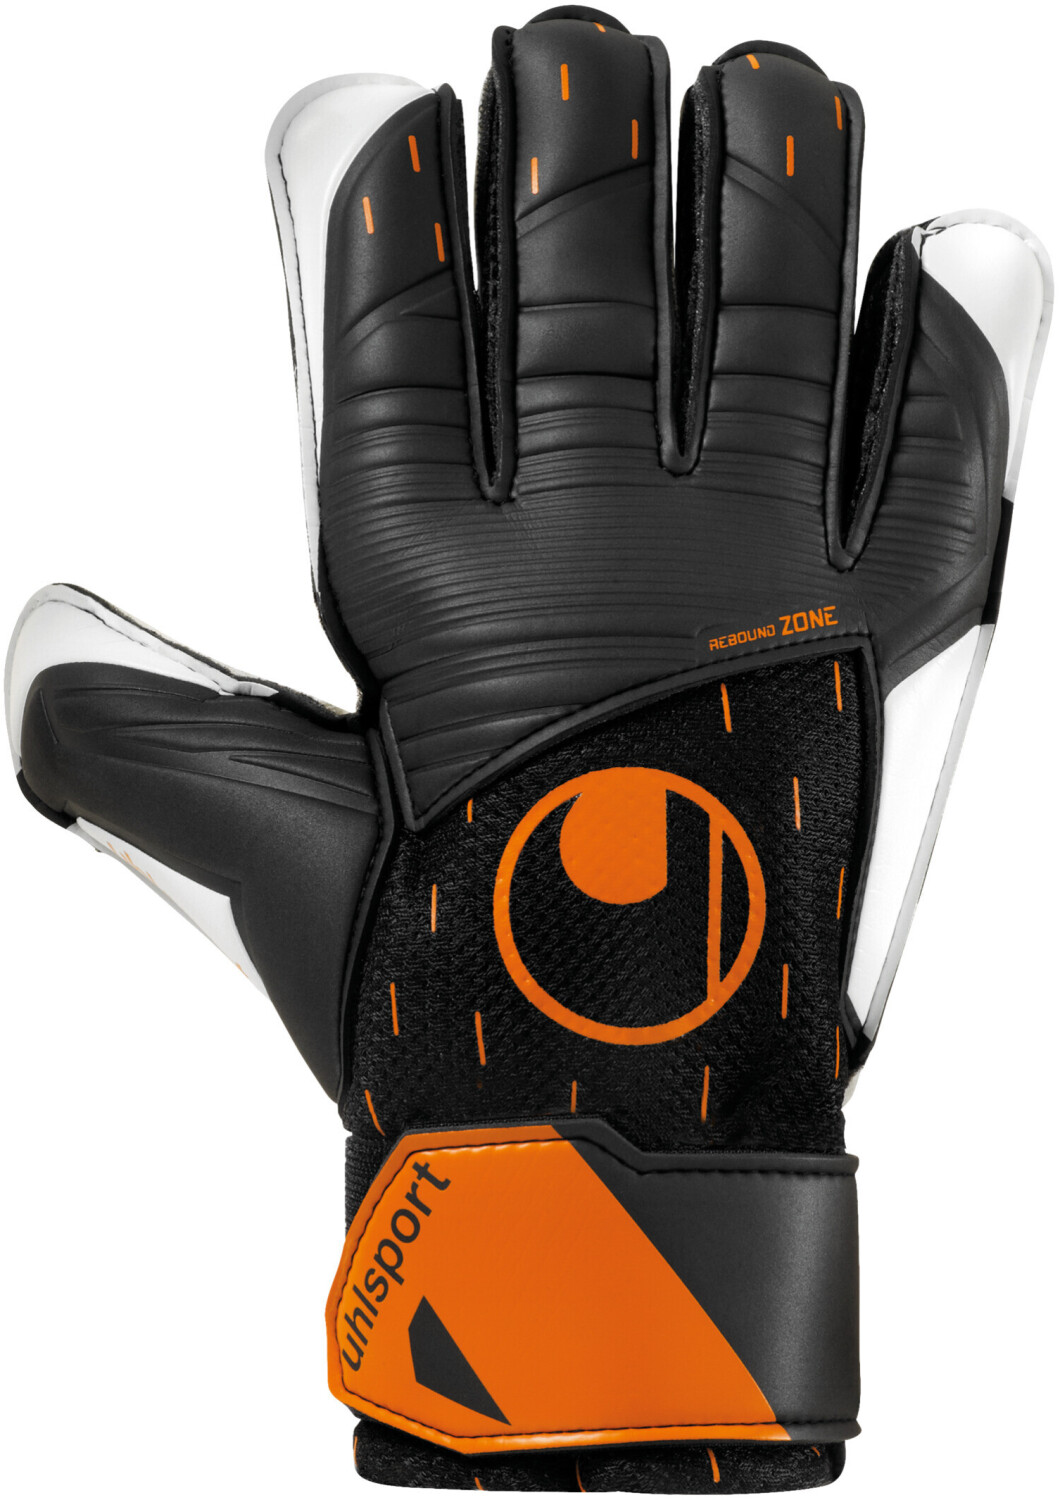 Photos - Other inventory Uhlsport Speed Contact Starter Soft Black White Orange F01 - (101 